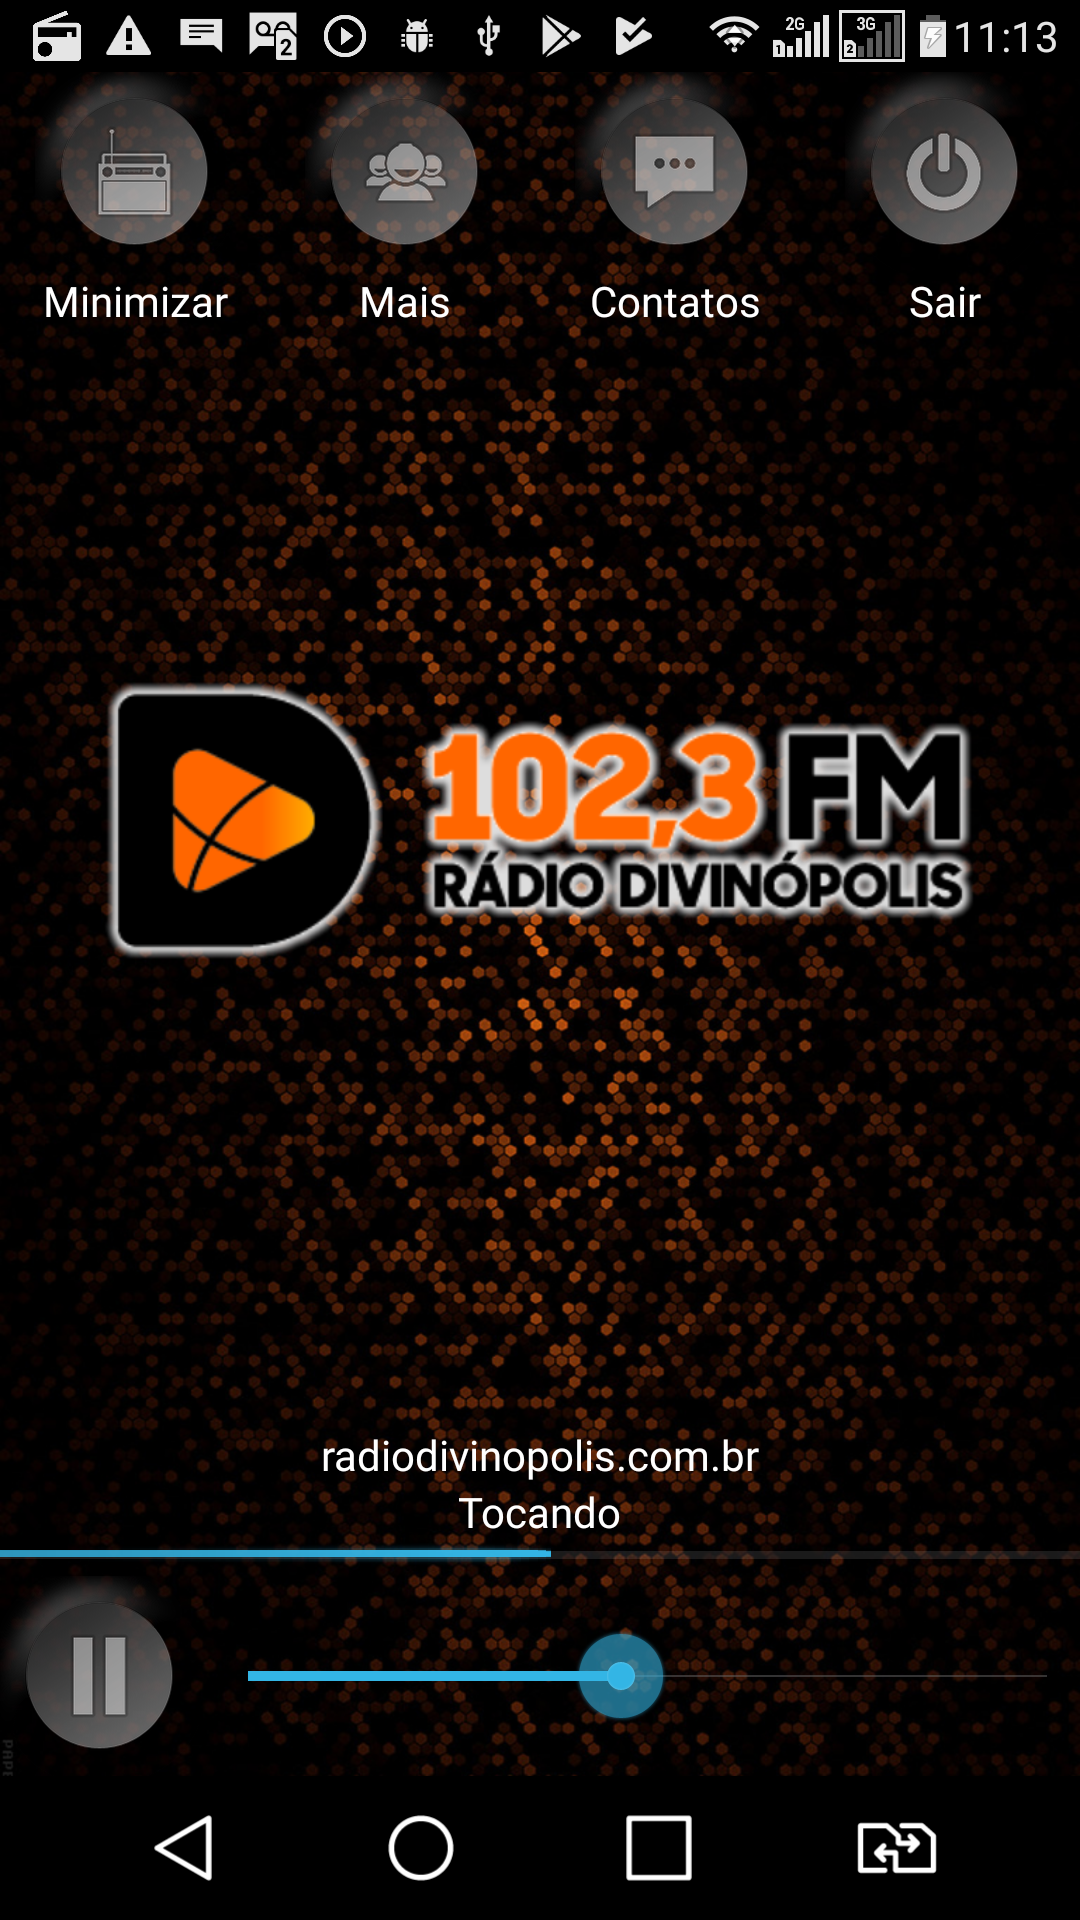 Android application Rádio Divinópolis FM 102,3 screenshort